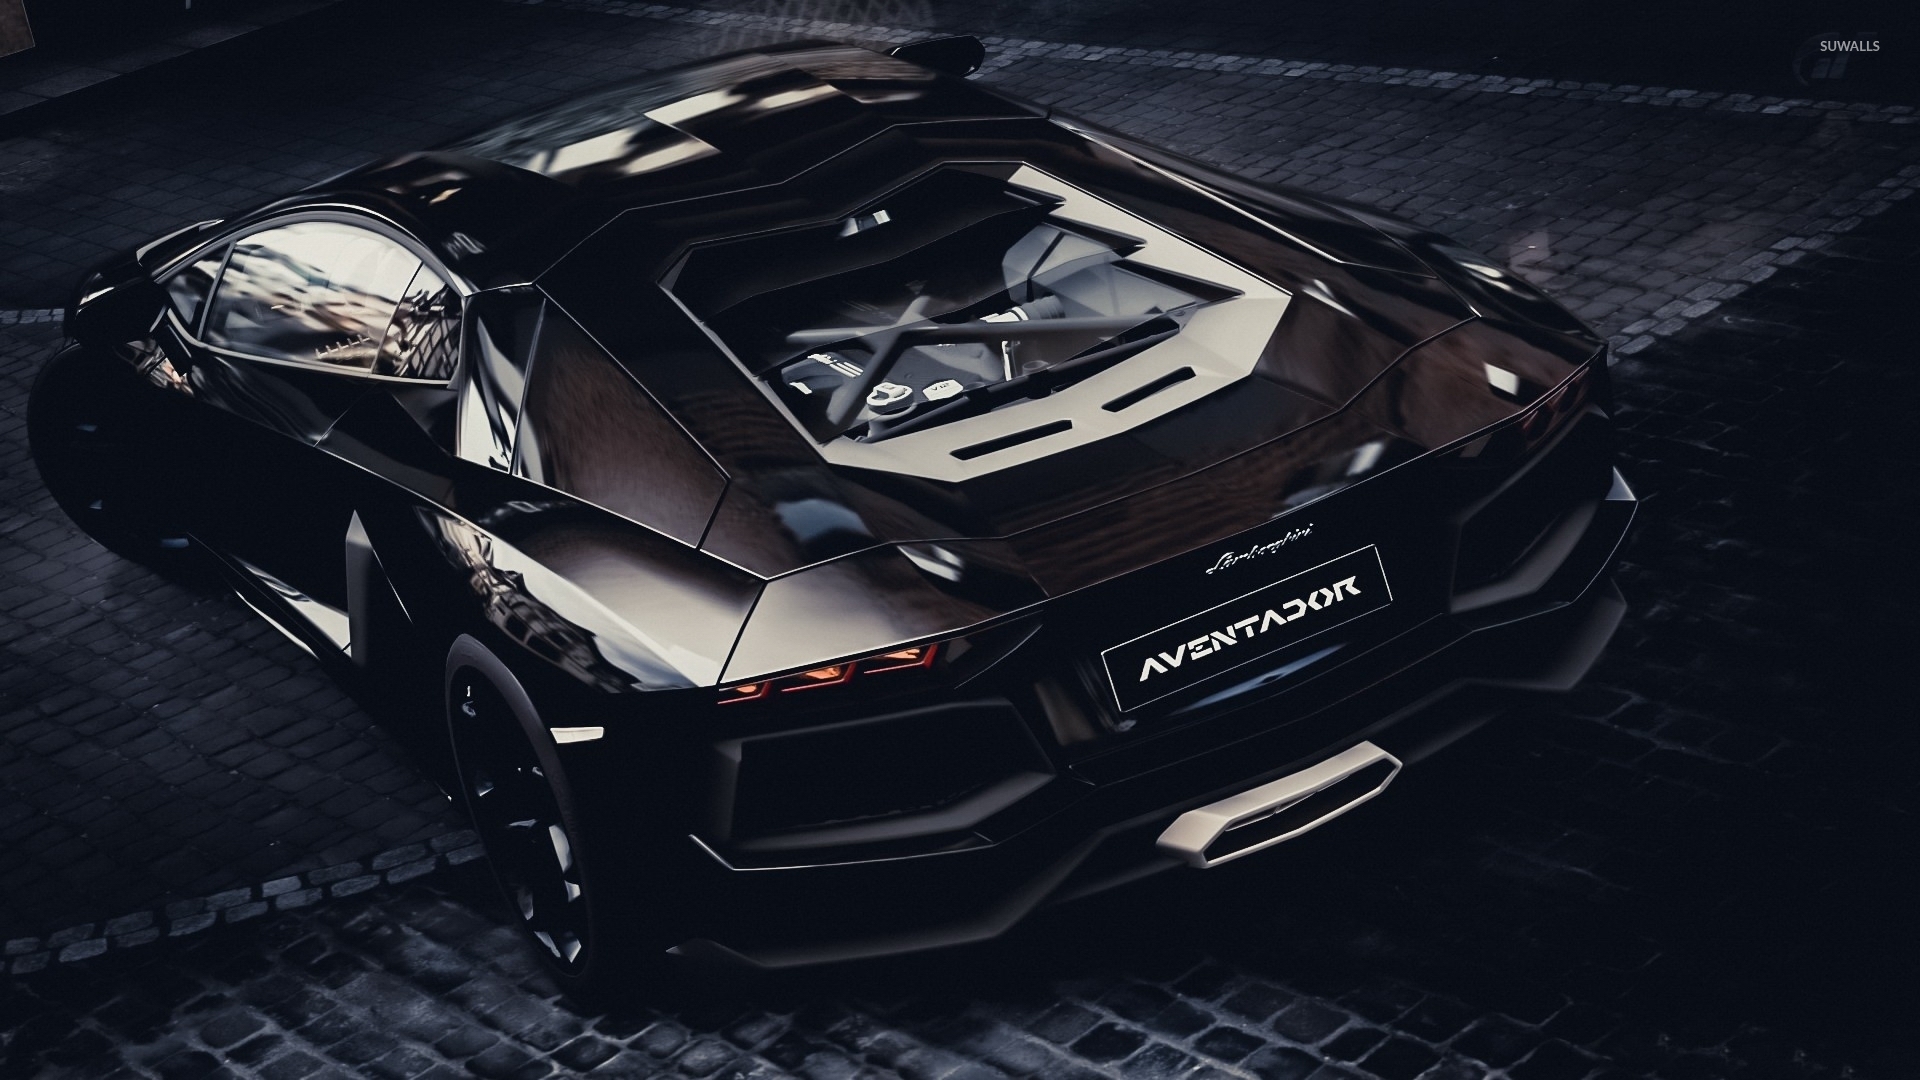 Hd Wallpaper Of Black Lamborghini